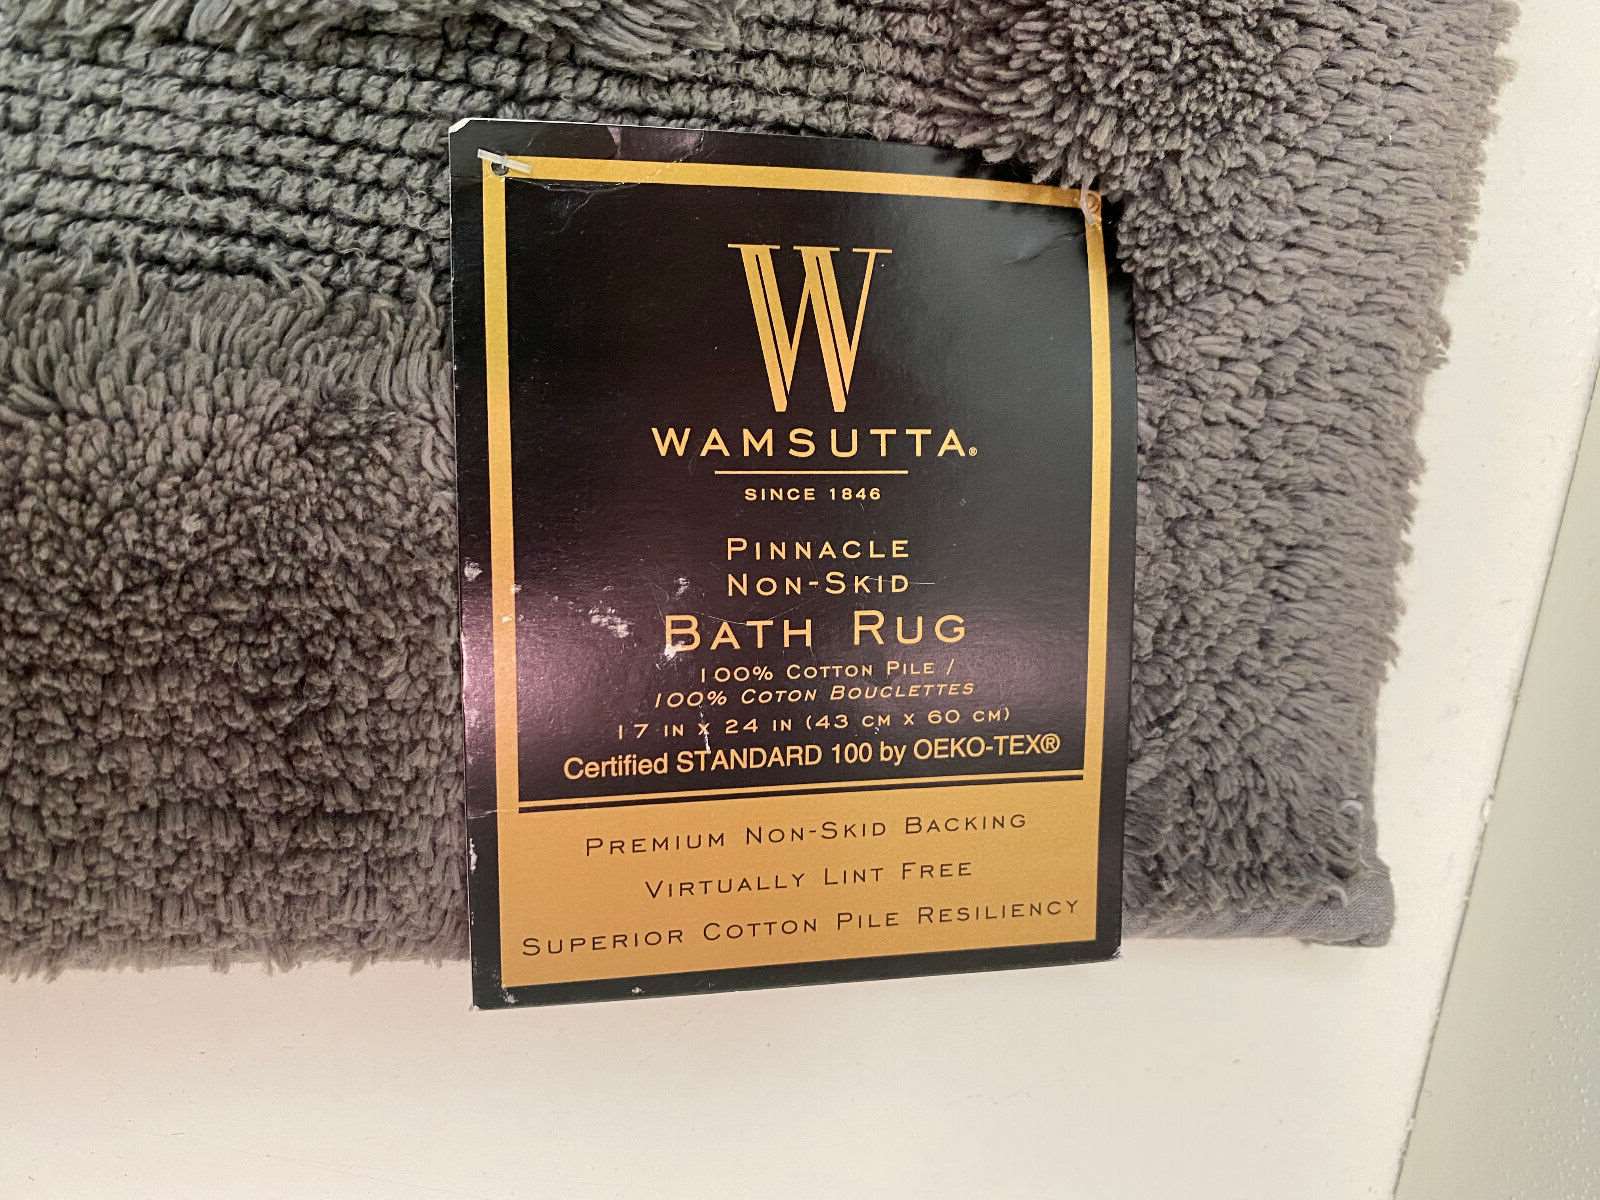 Who Makes Wamsutta Bath Rugs